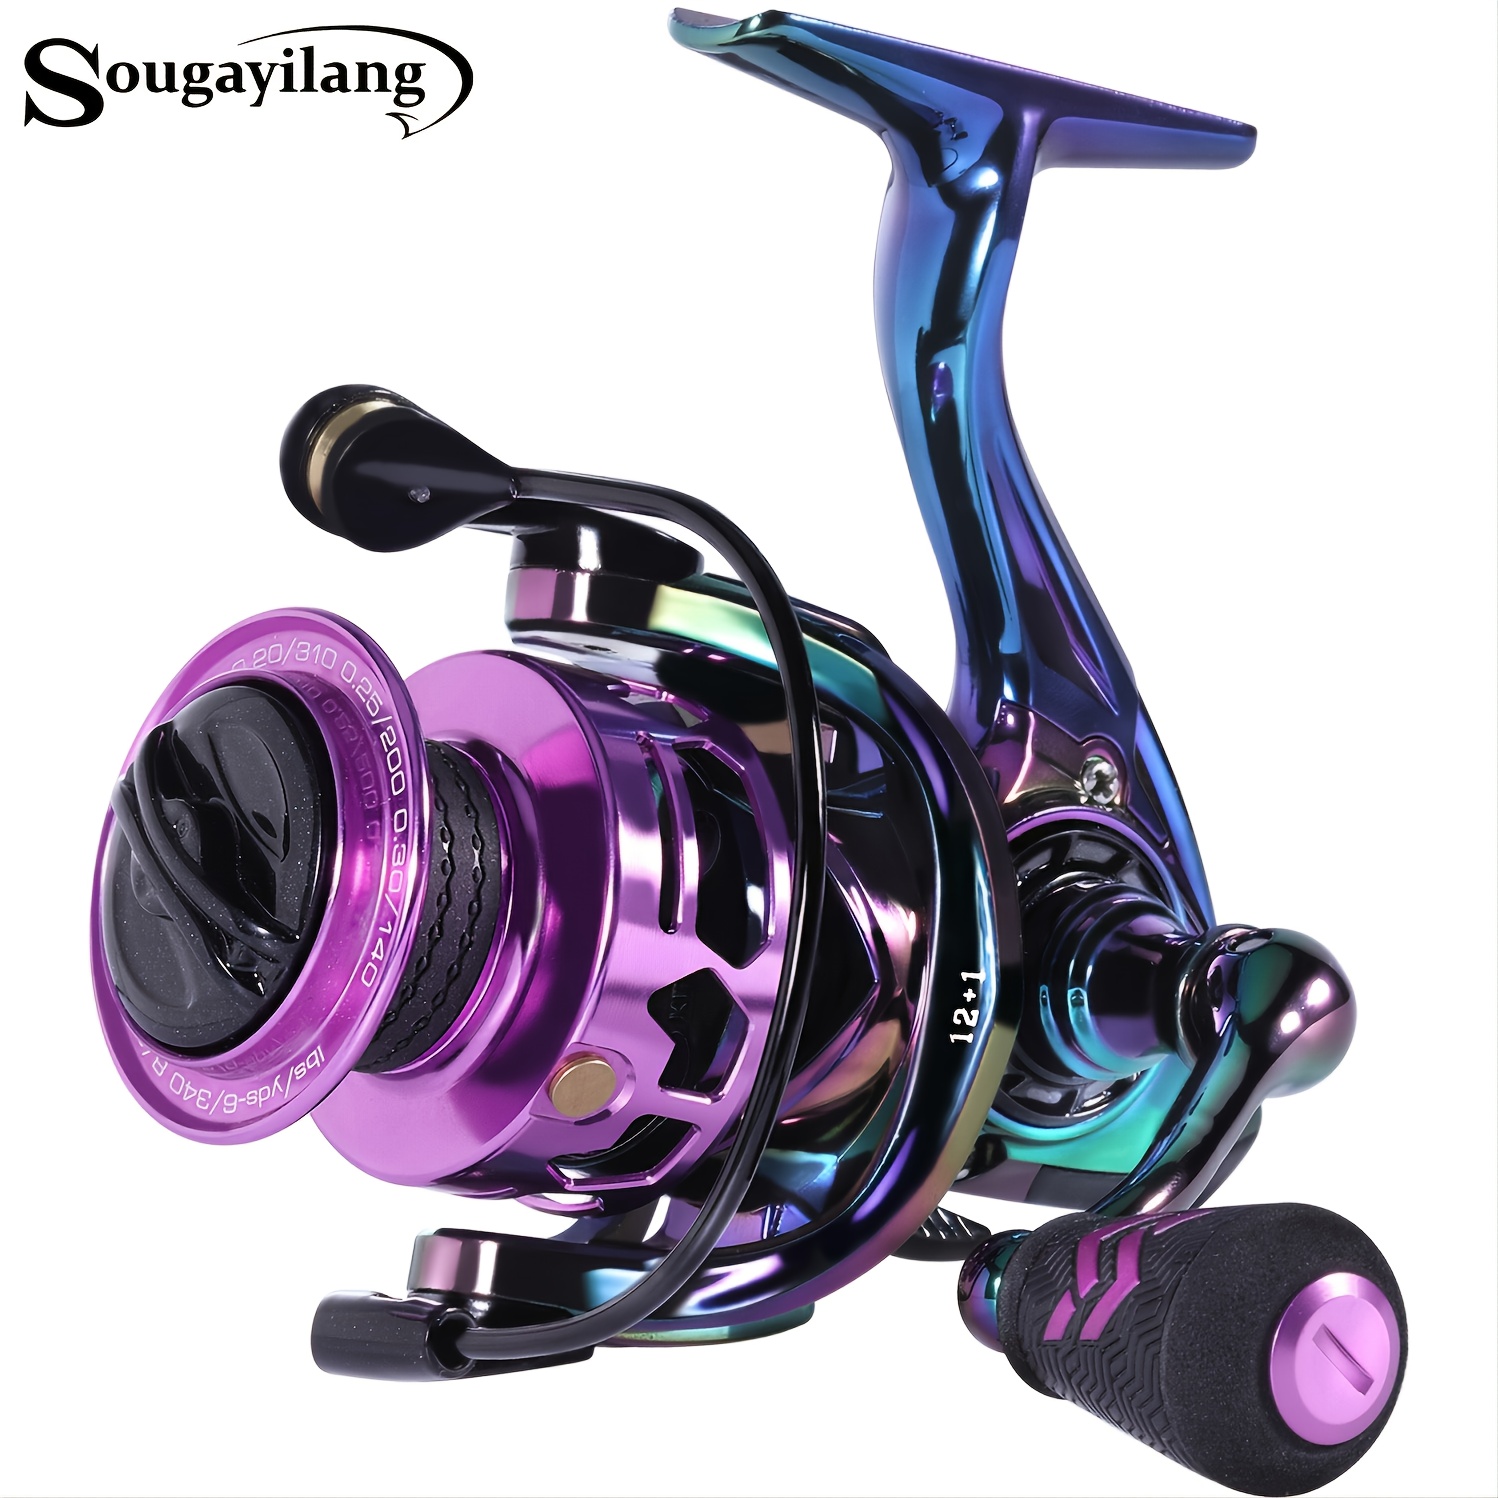 Sougayilang Spinning Reel - Smooth 12+1BB Fishing Reel with Comfortable CNC  Handle